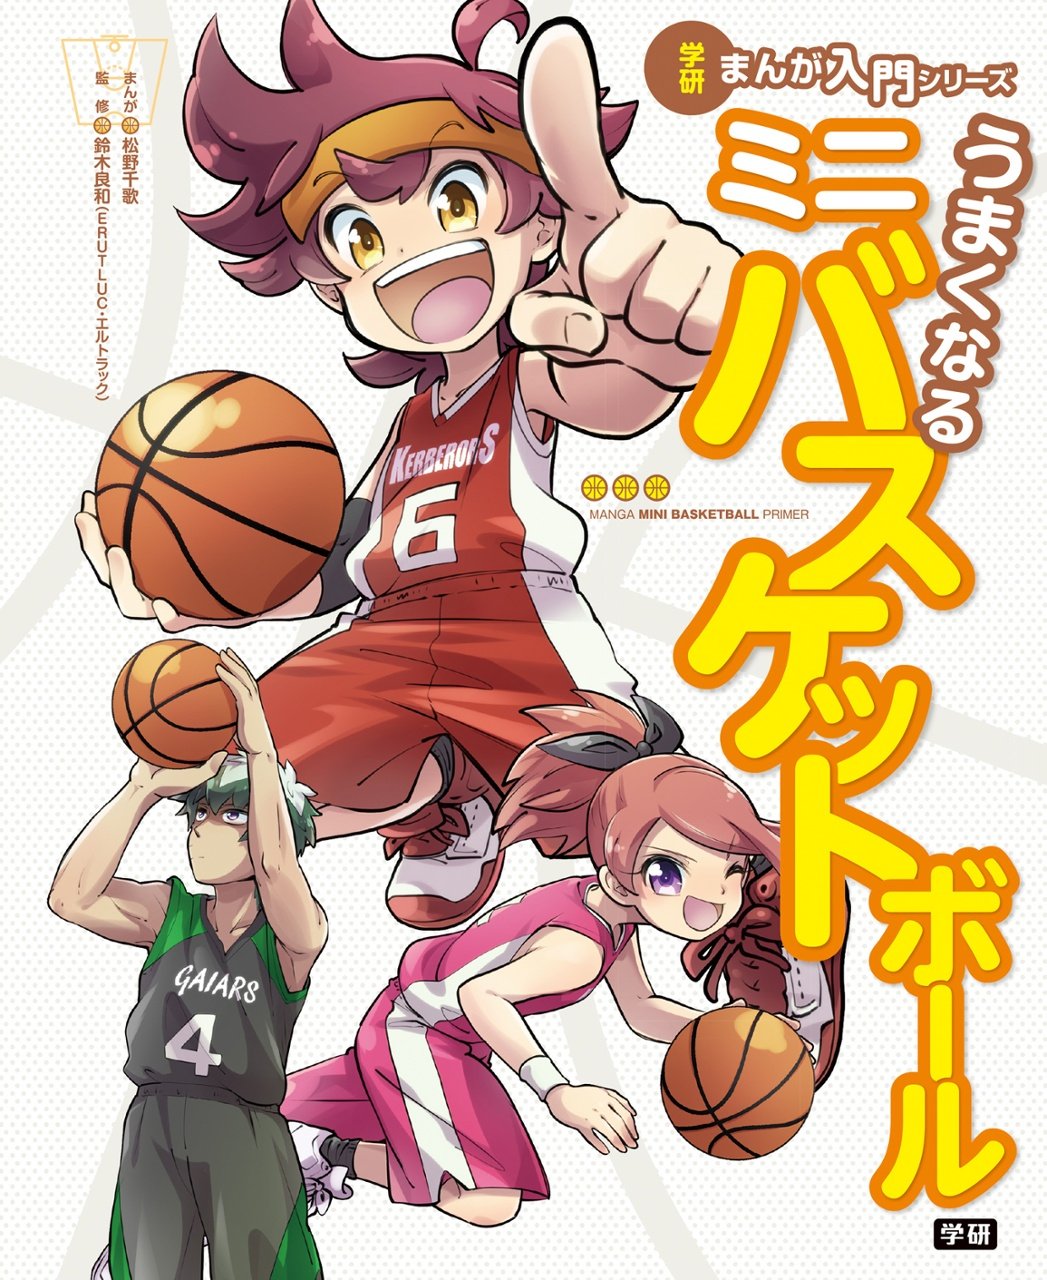 Manga Mini Basketball Primer